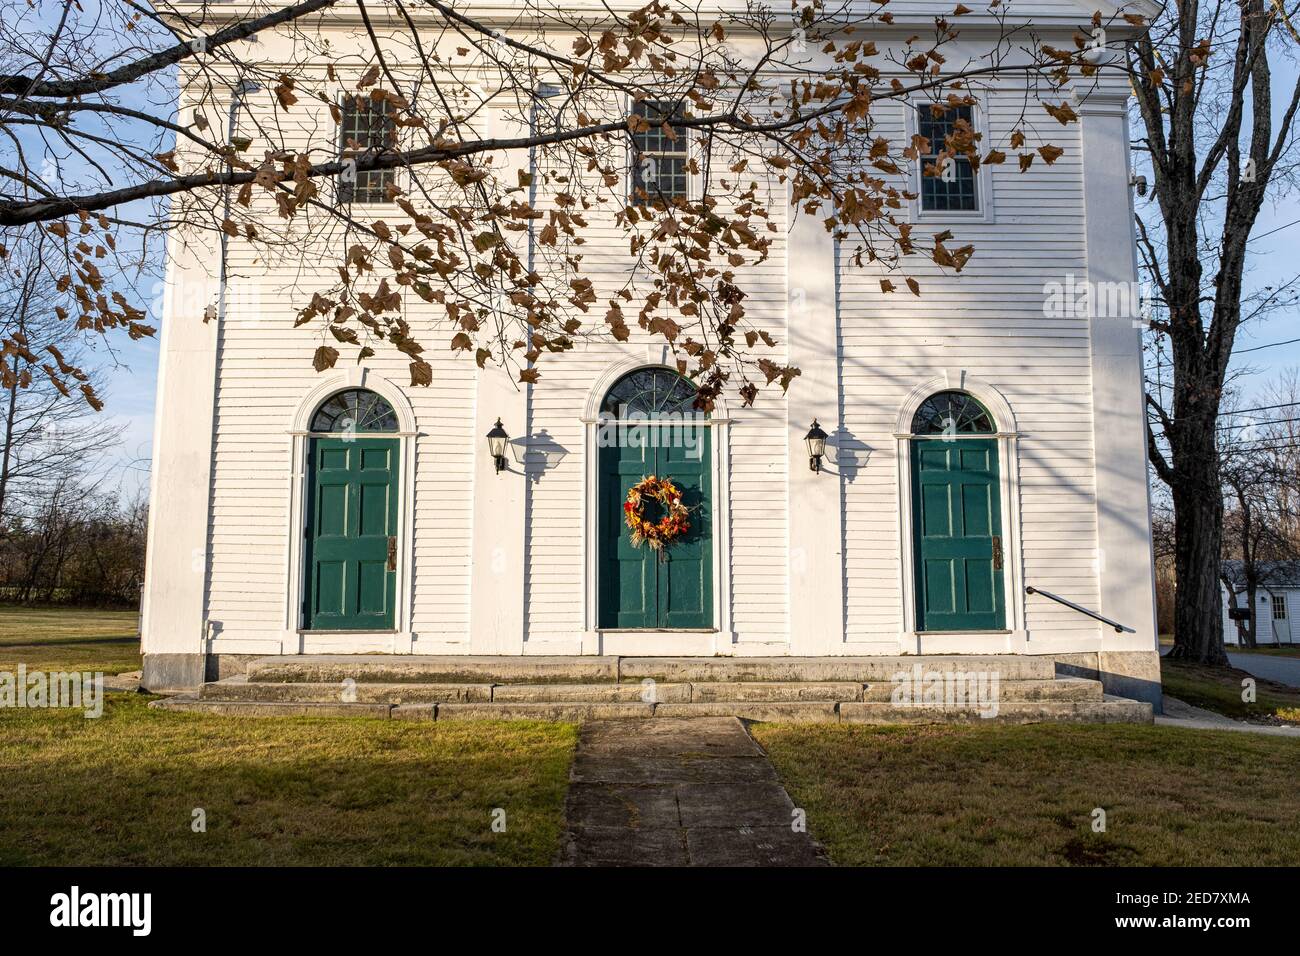 Universalist Congregational Church, Community Church of North Orange und Tully, Massachusetts Stockfoto